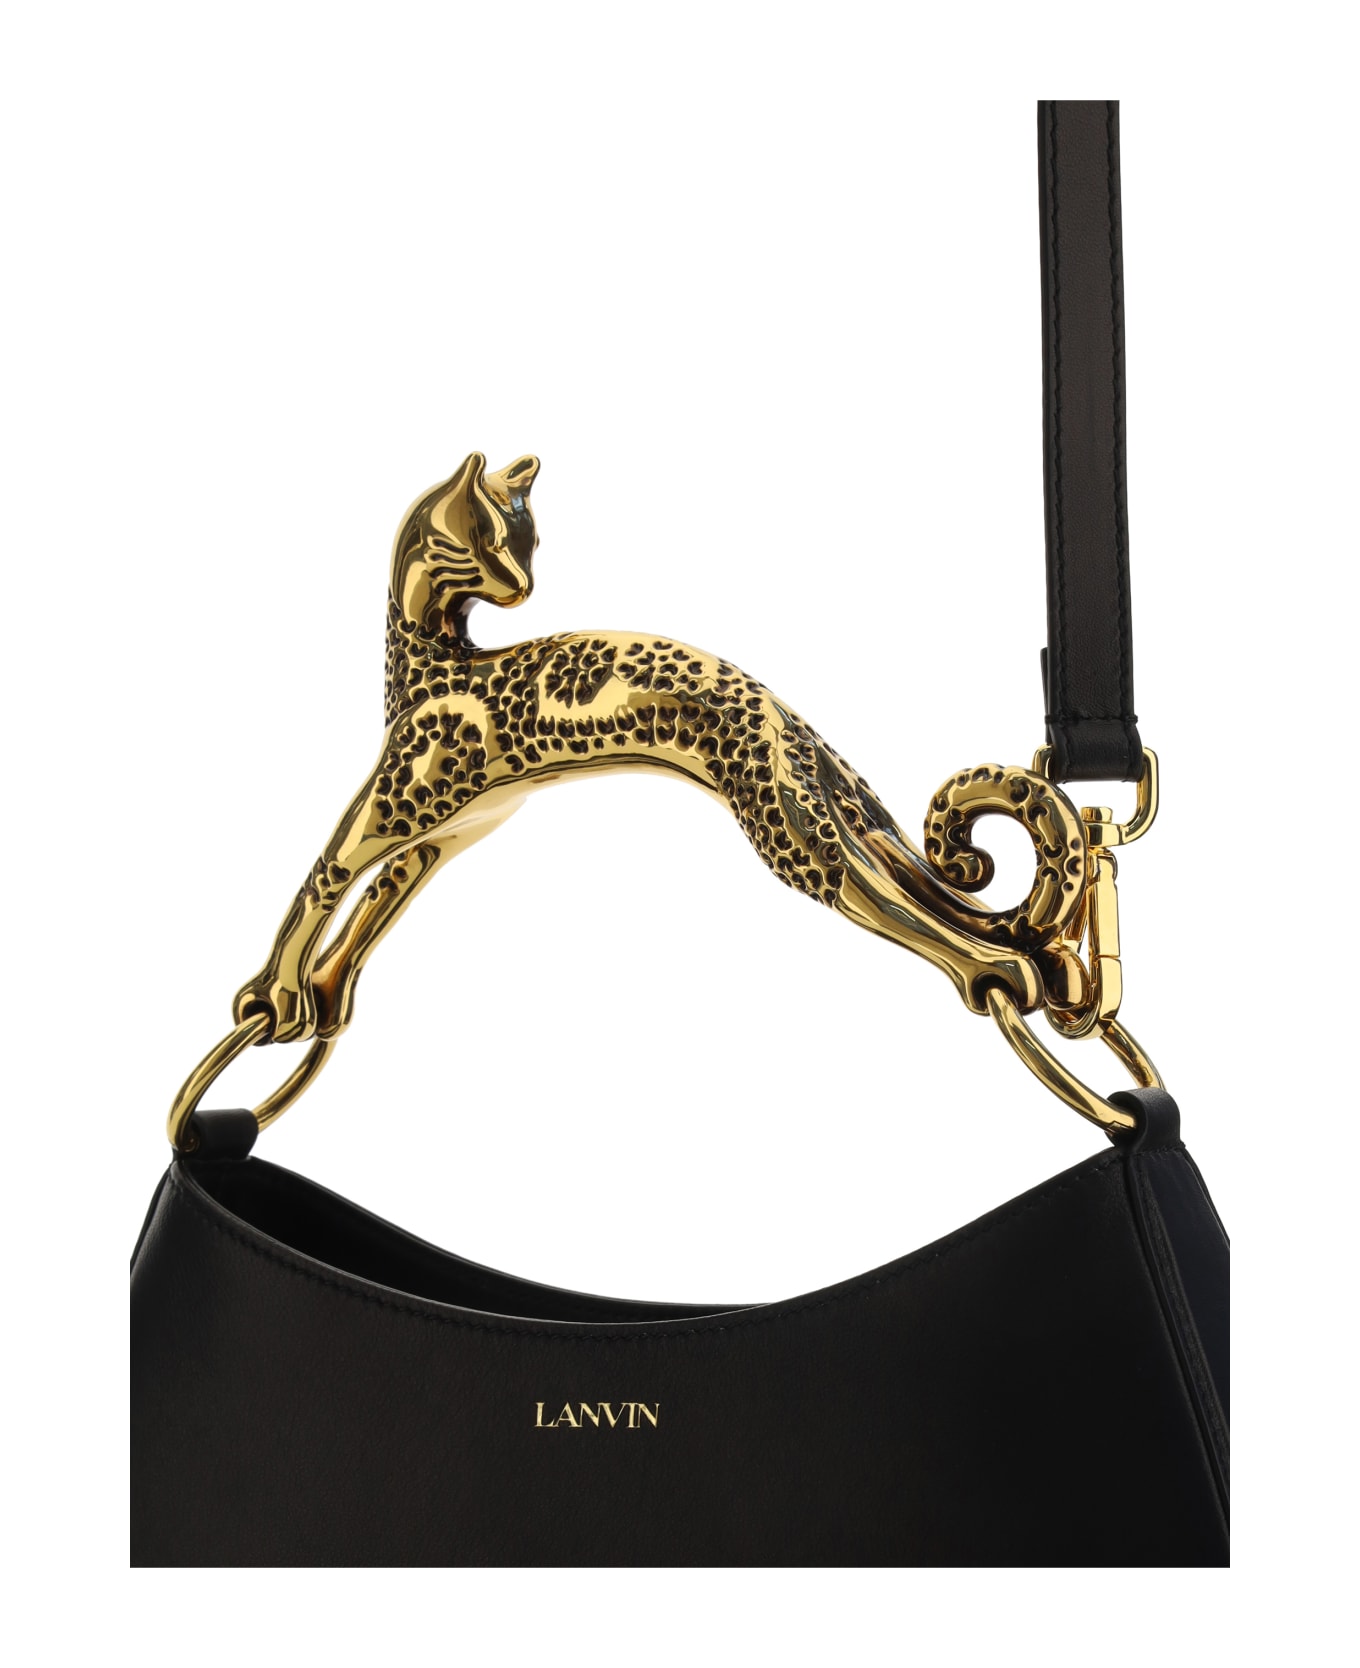 Lanvin Hobo Handbag - Black